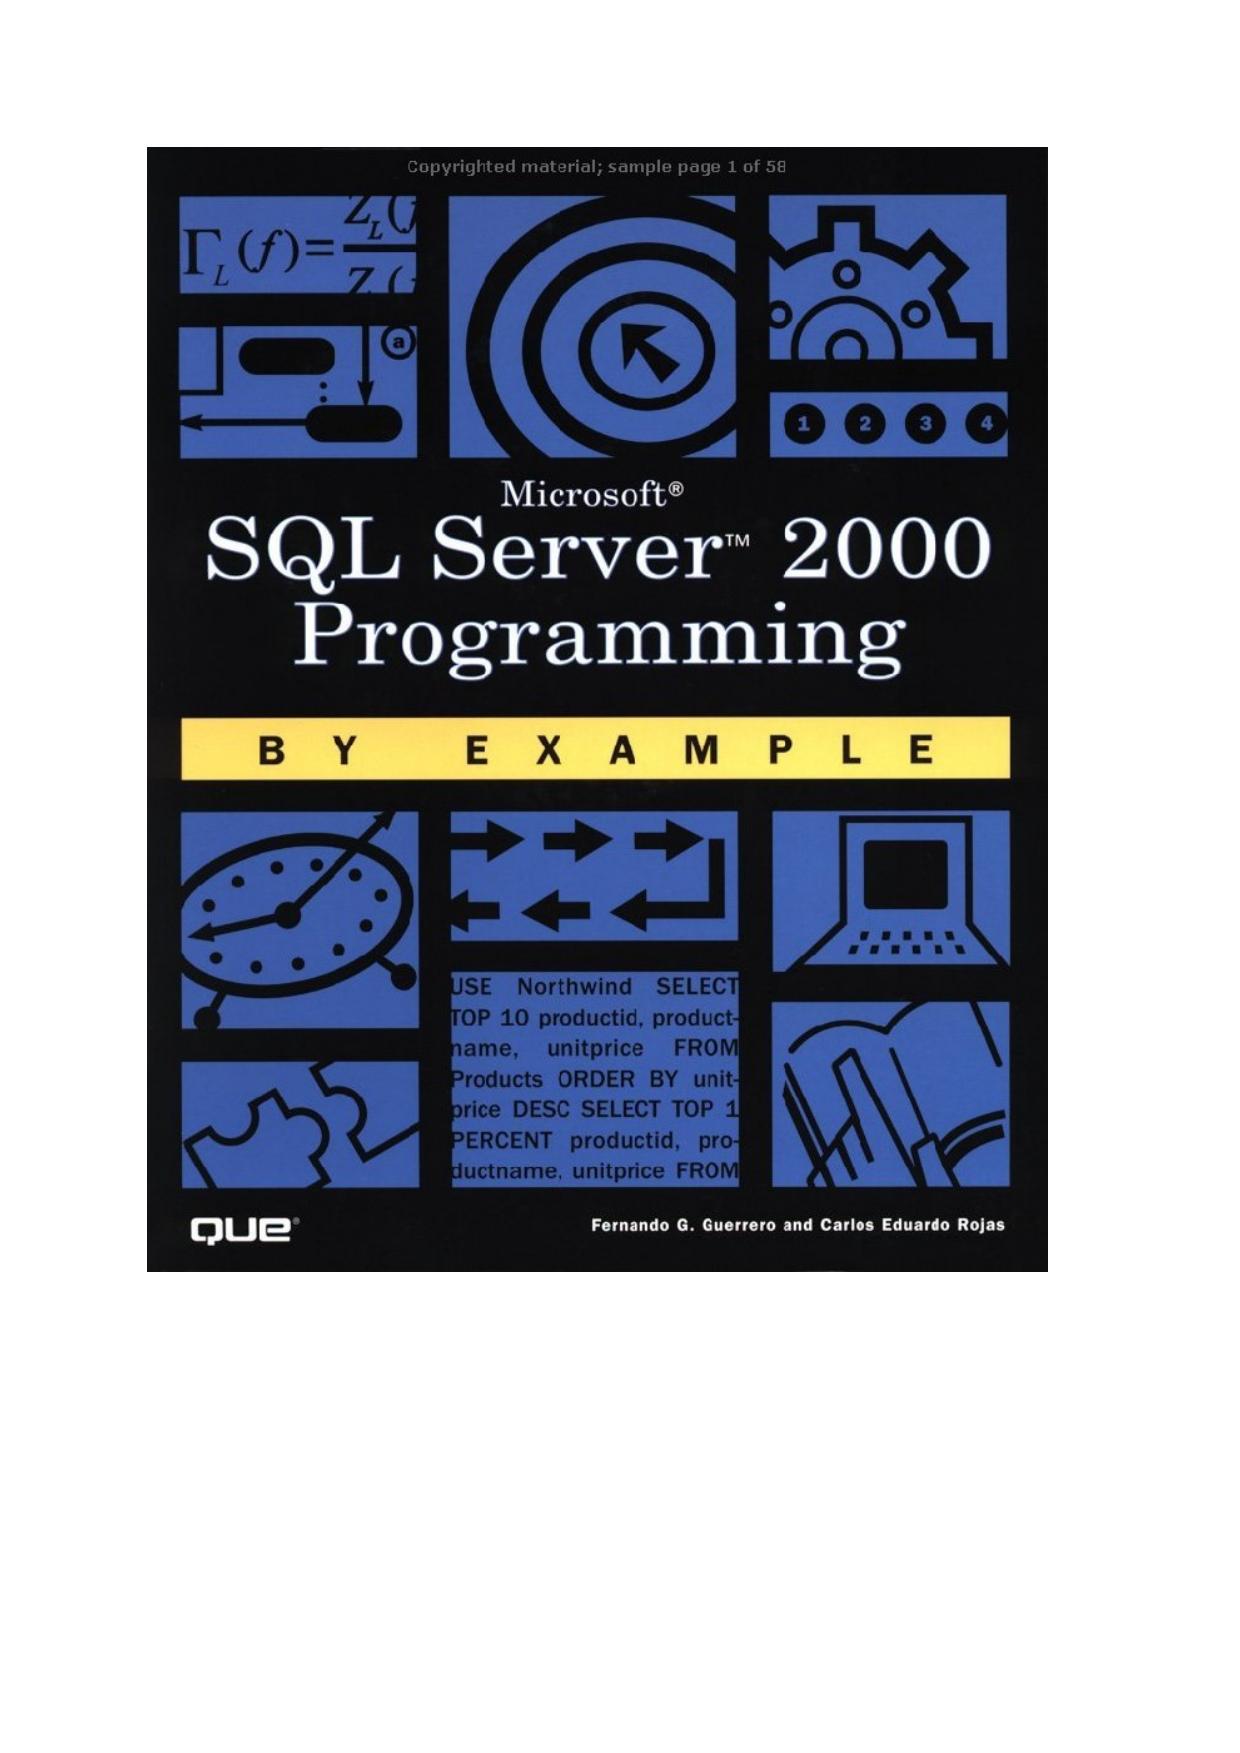 Microsoft Word - Microsoft SQL Server 2000 Programming by Example.doc